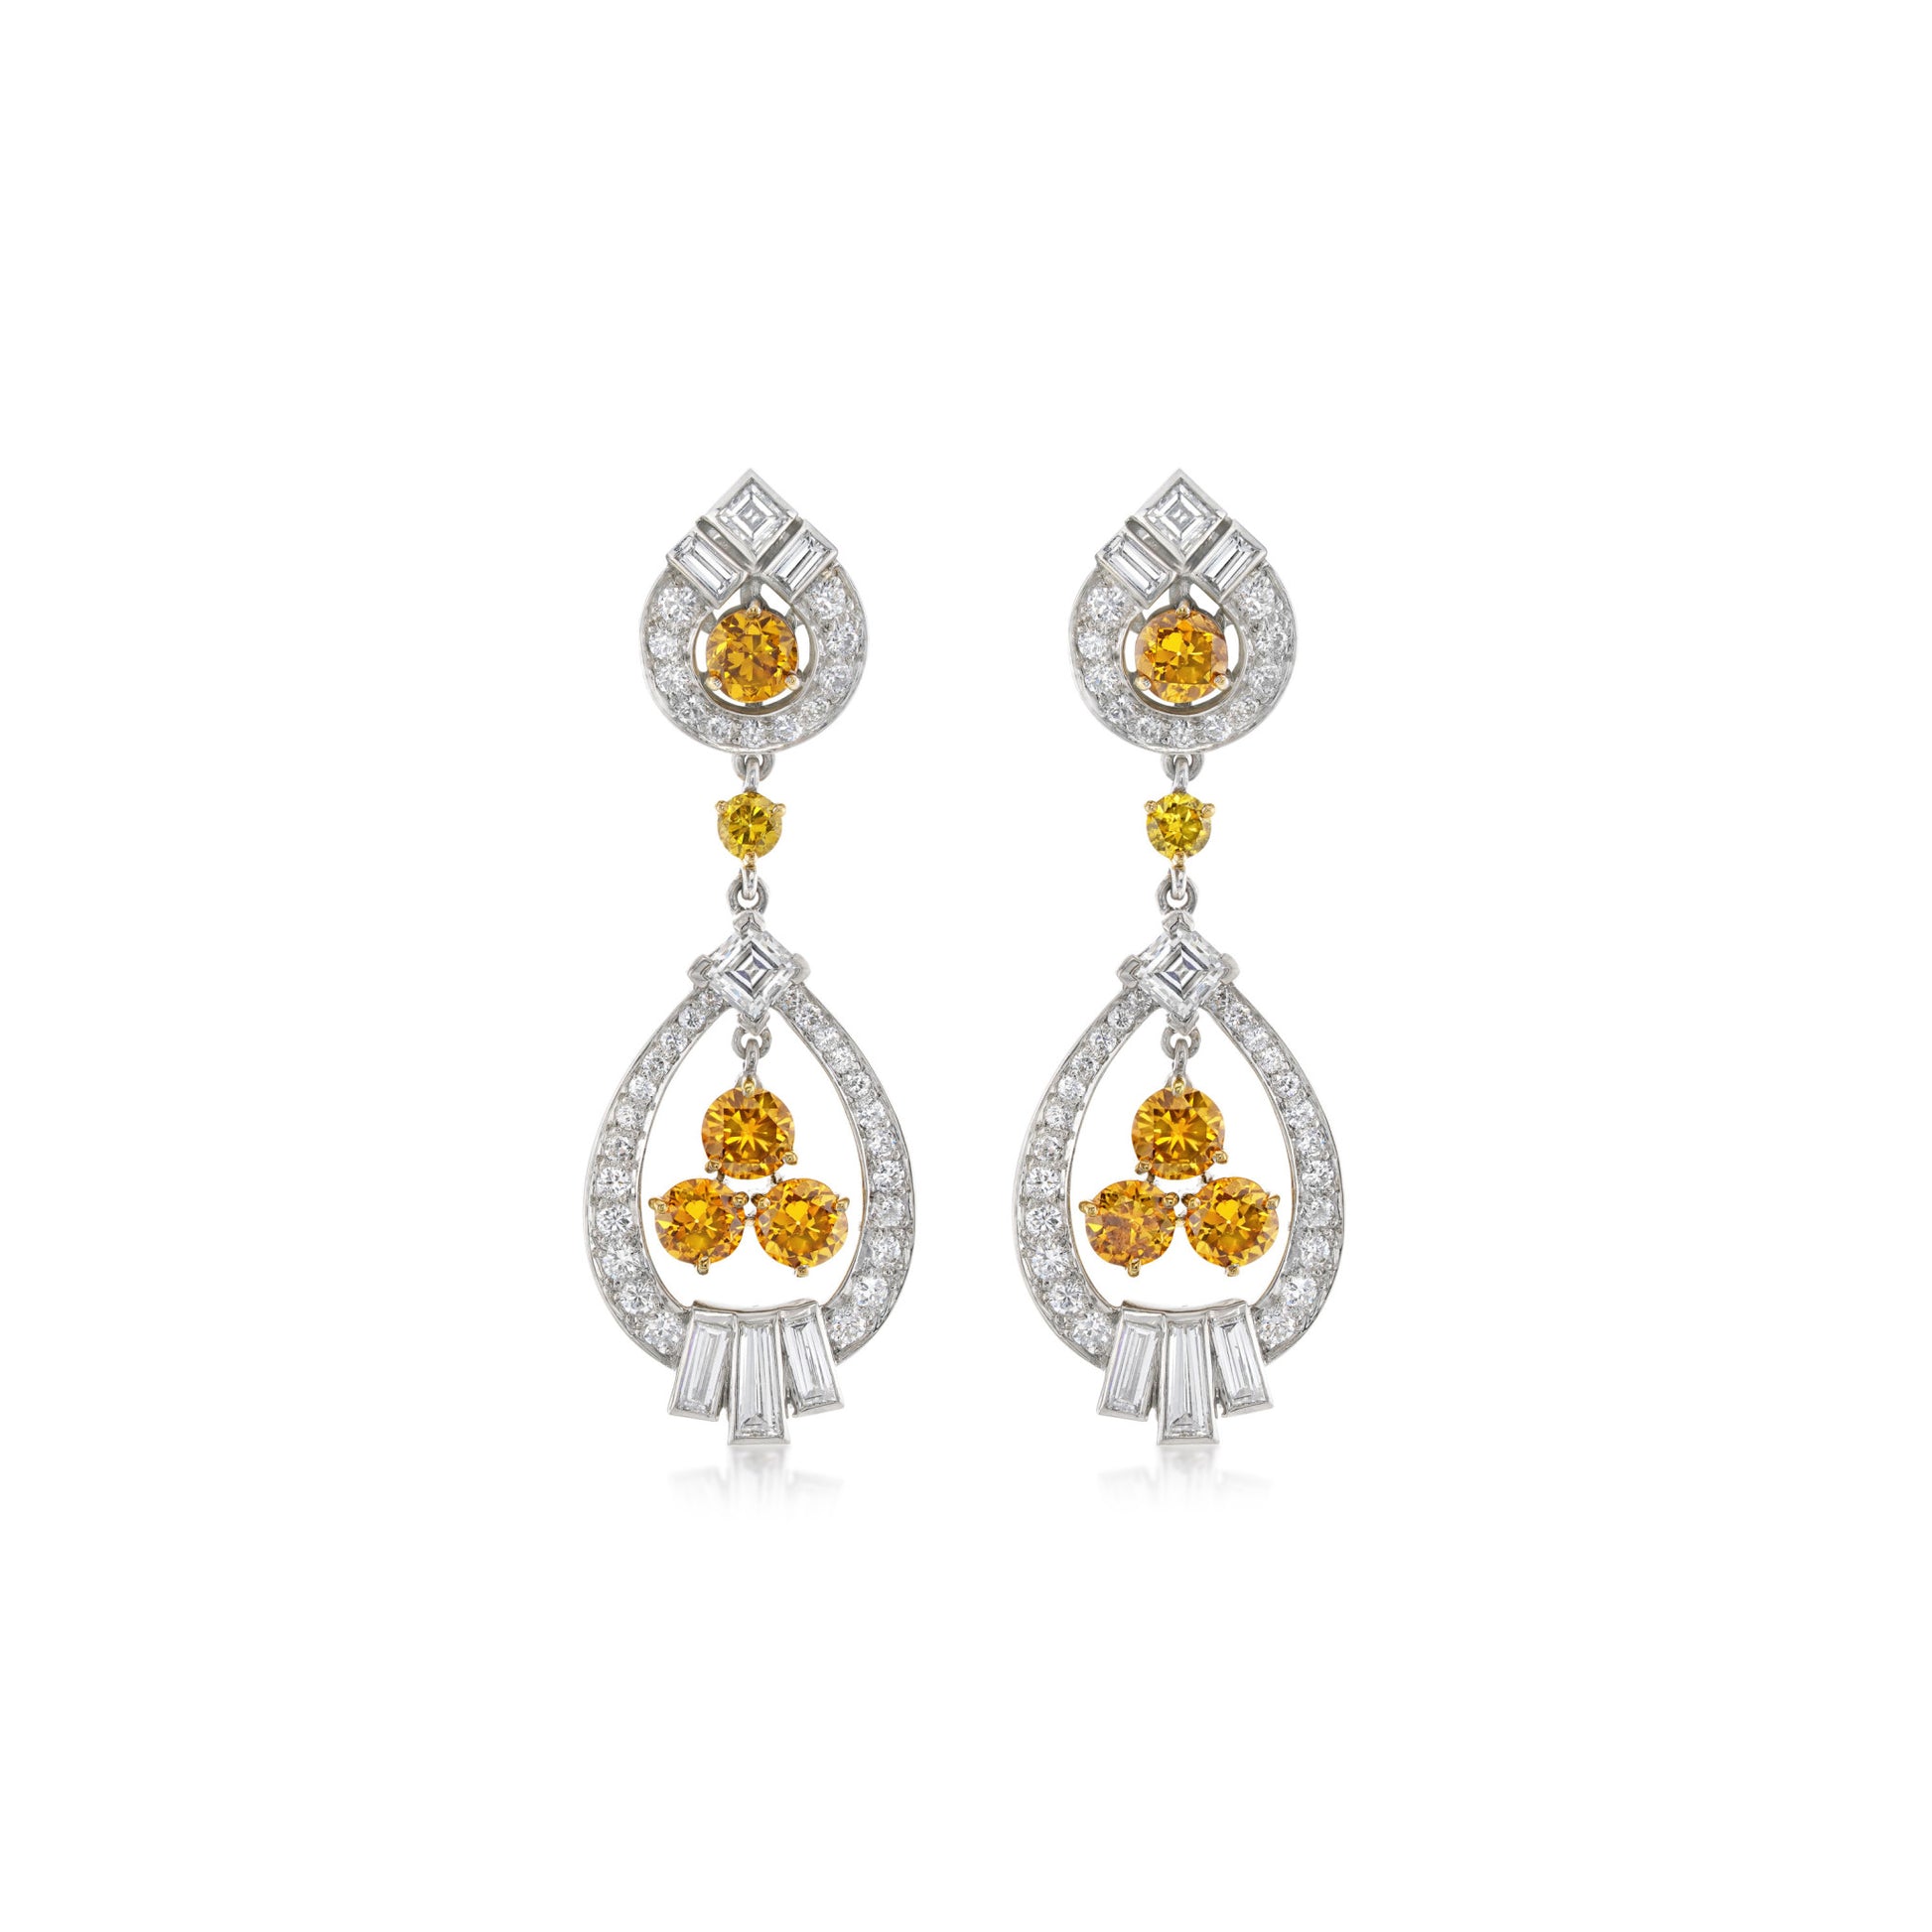 Tiffany & Co. Art Deco Palladium Diamond Earrings front